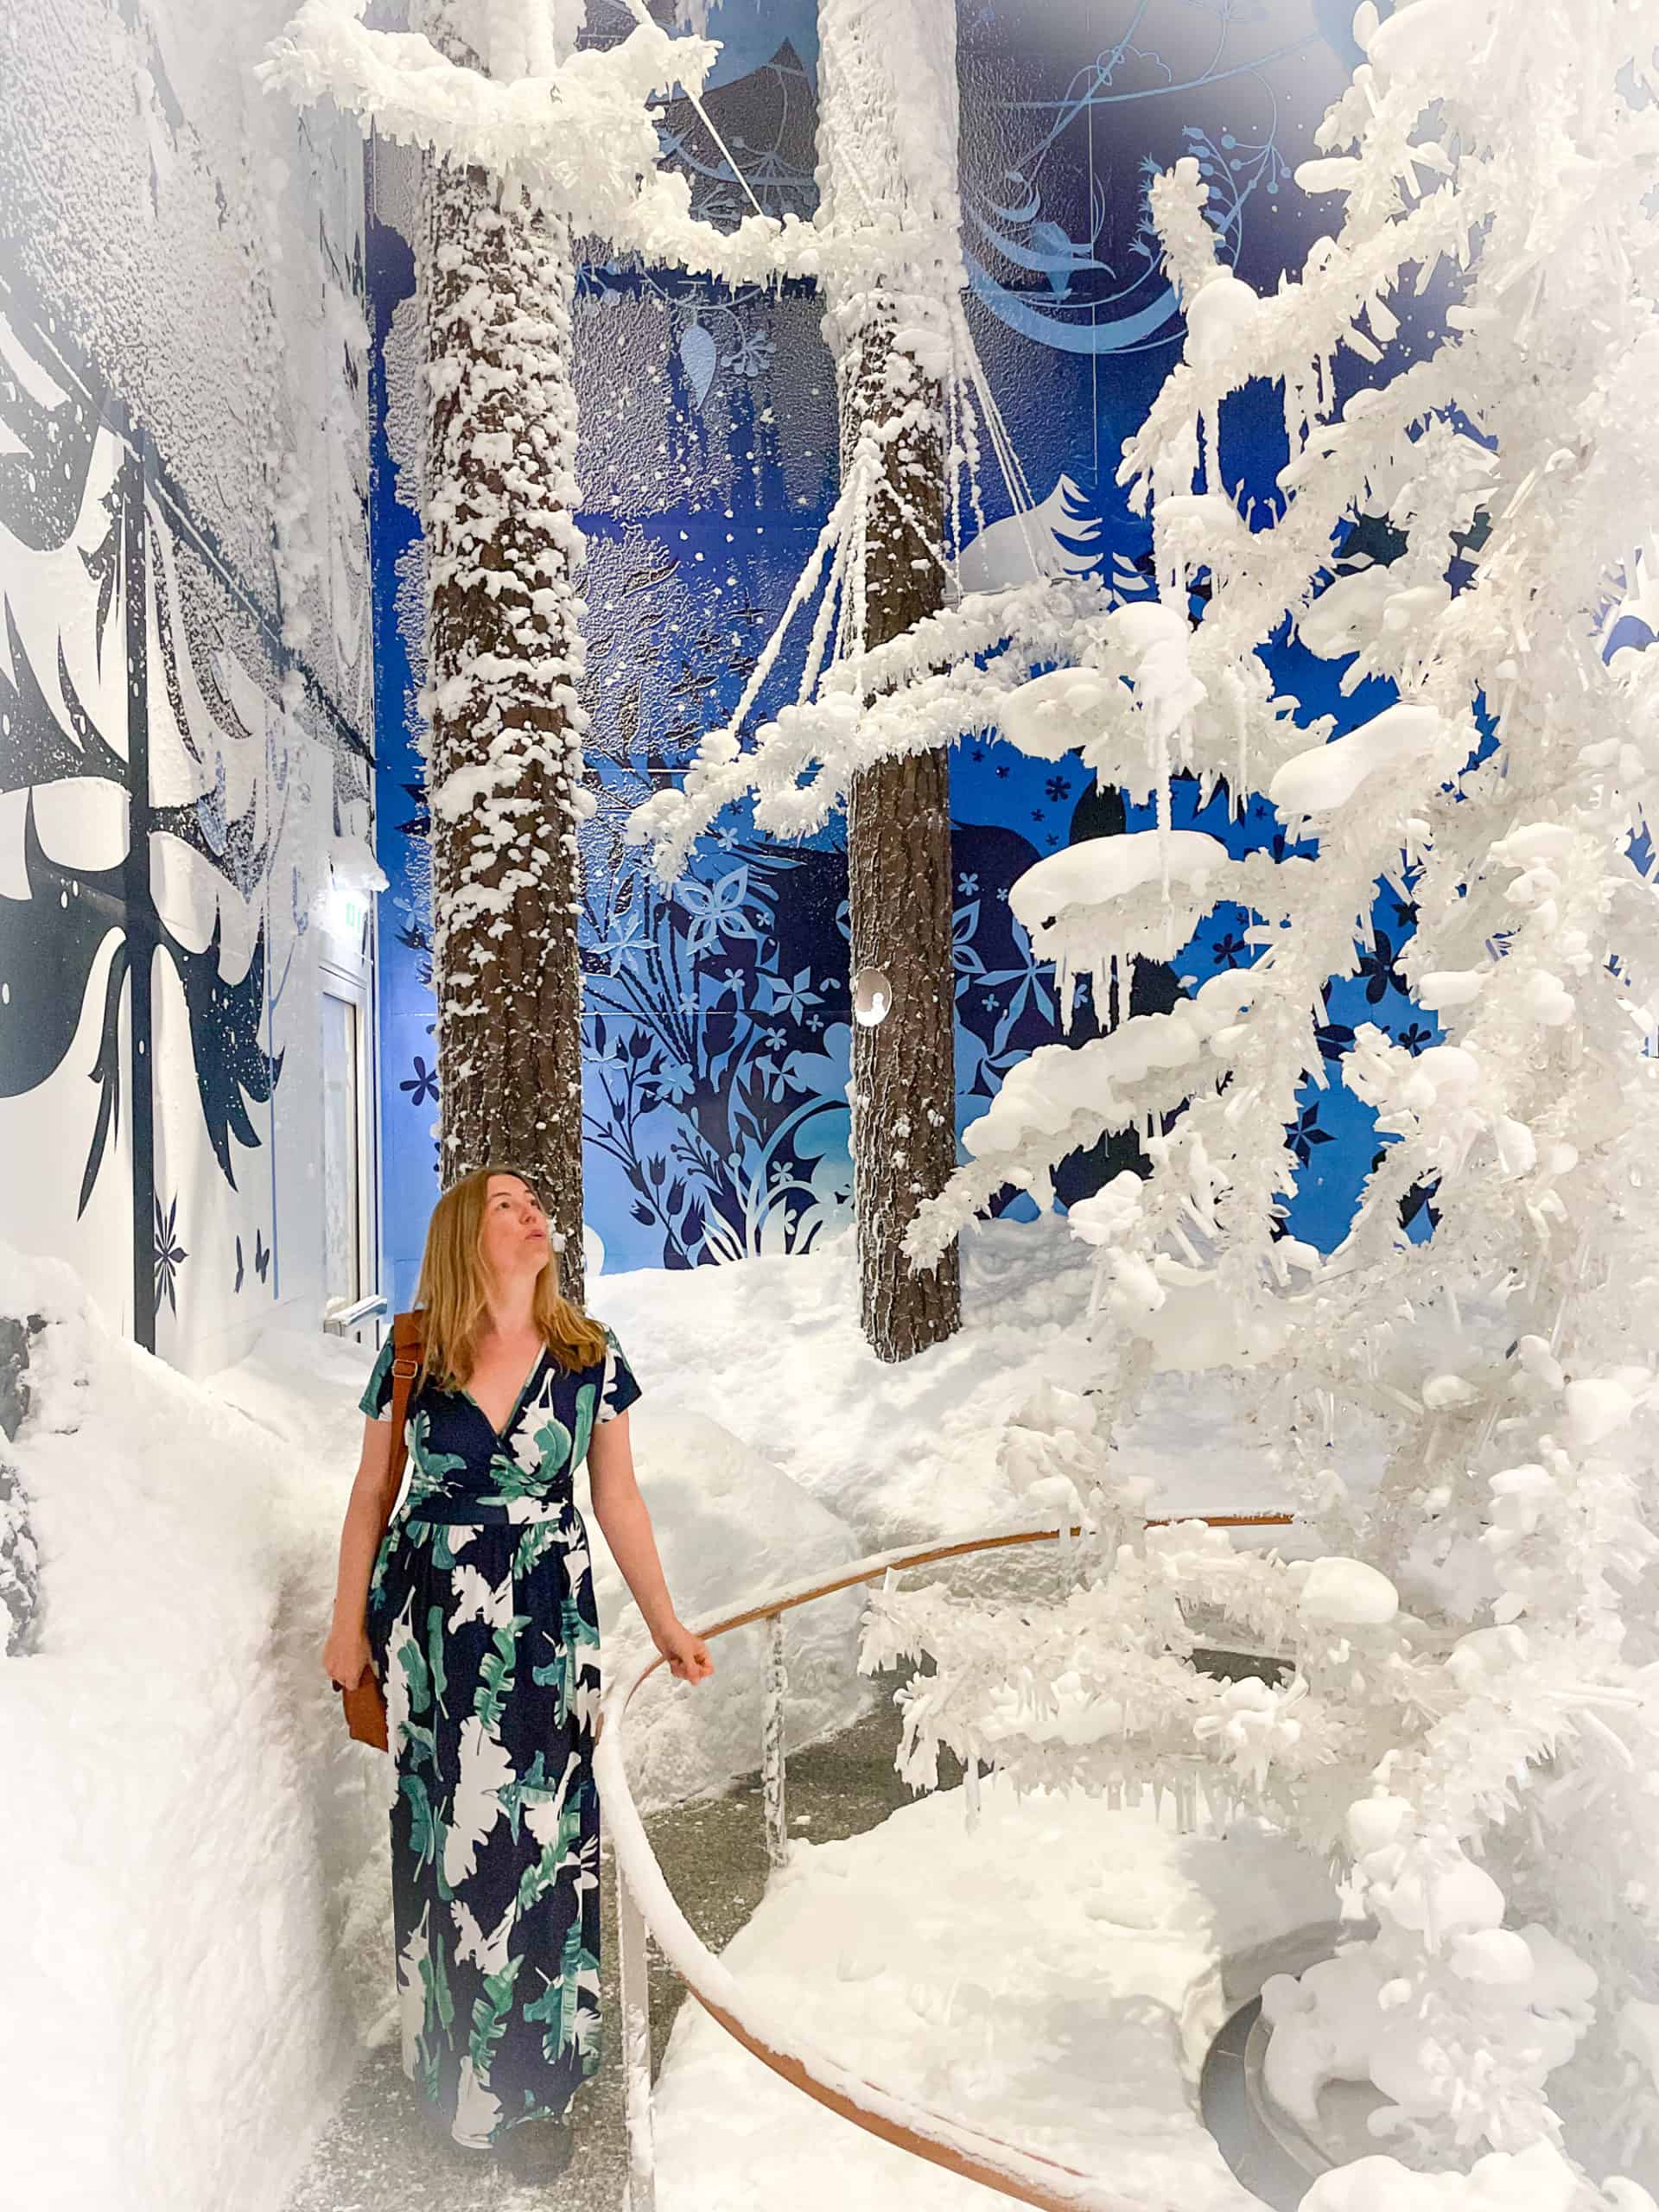 Austria - Innsbruck - Kristallwelten Abigail King in snow